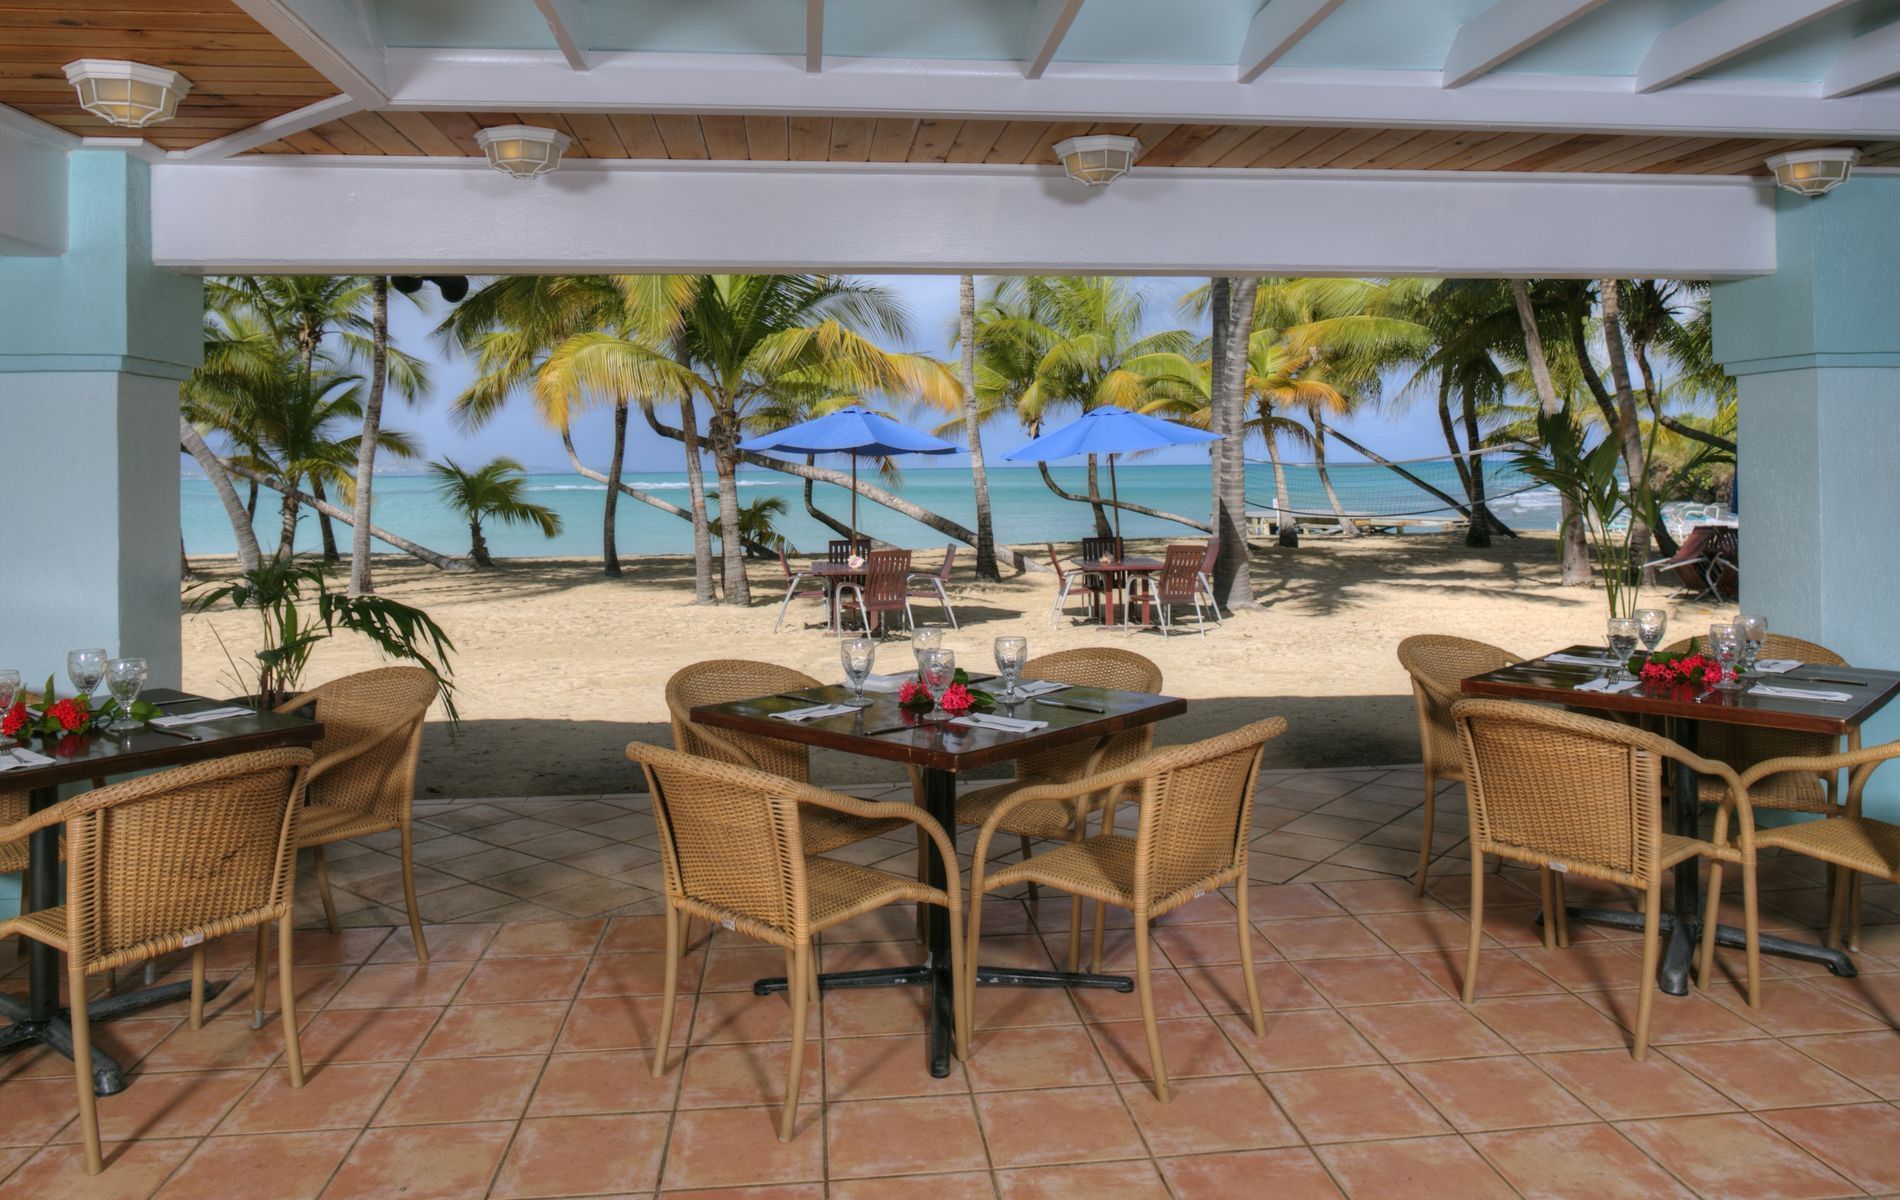 A dining area in Mermaid beach restaurant near Buccaneer Hotel